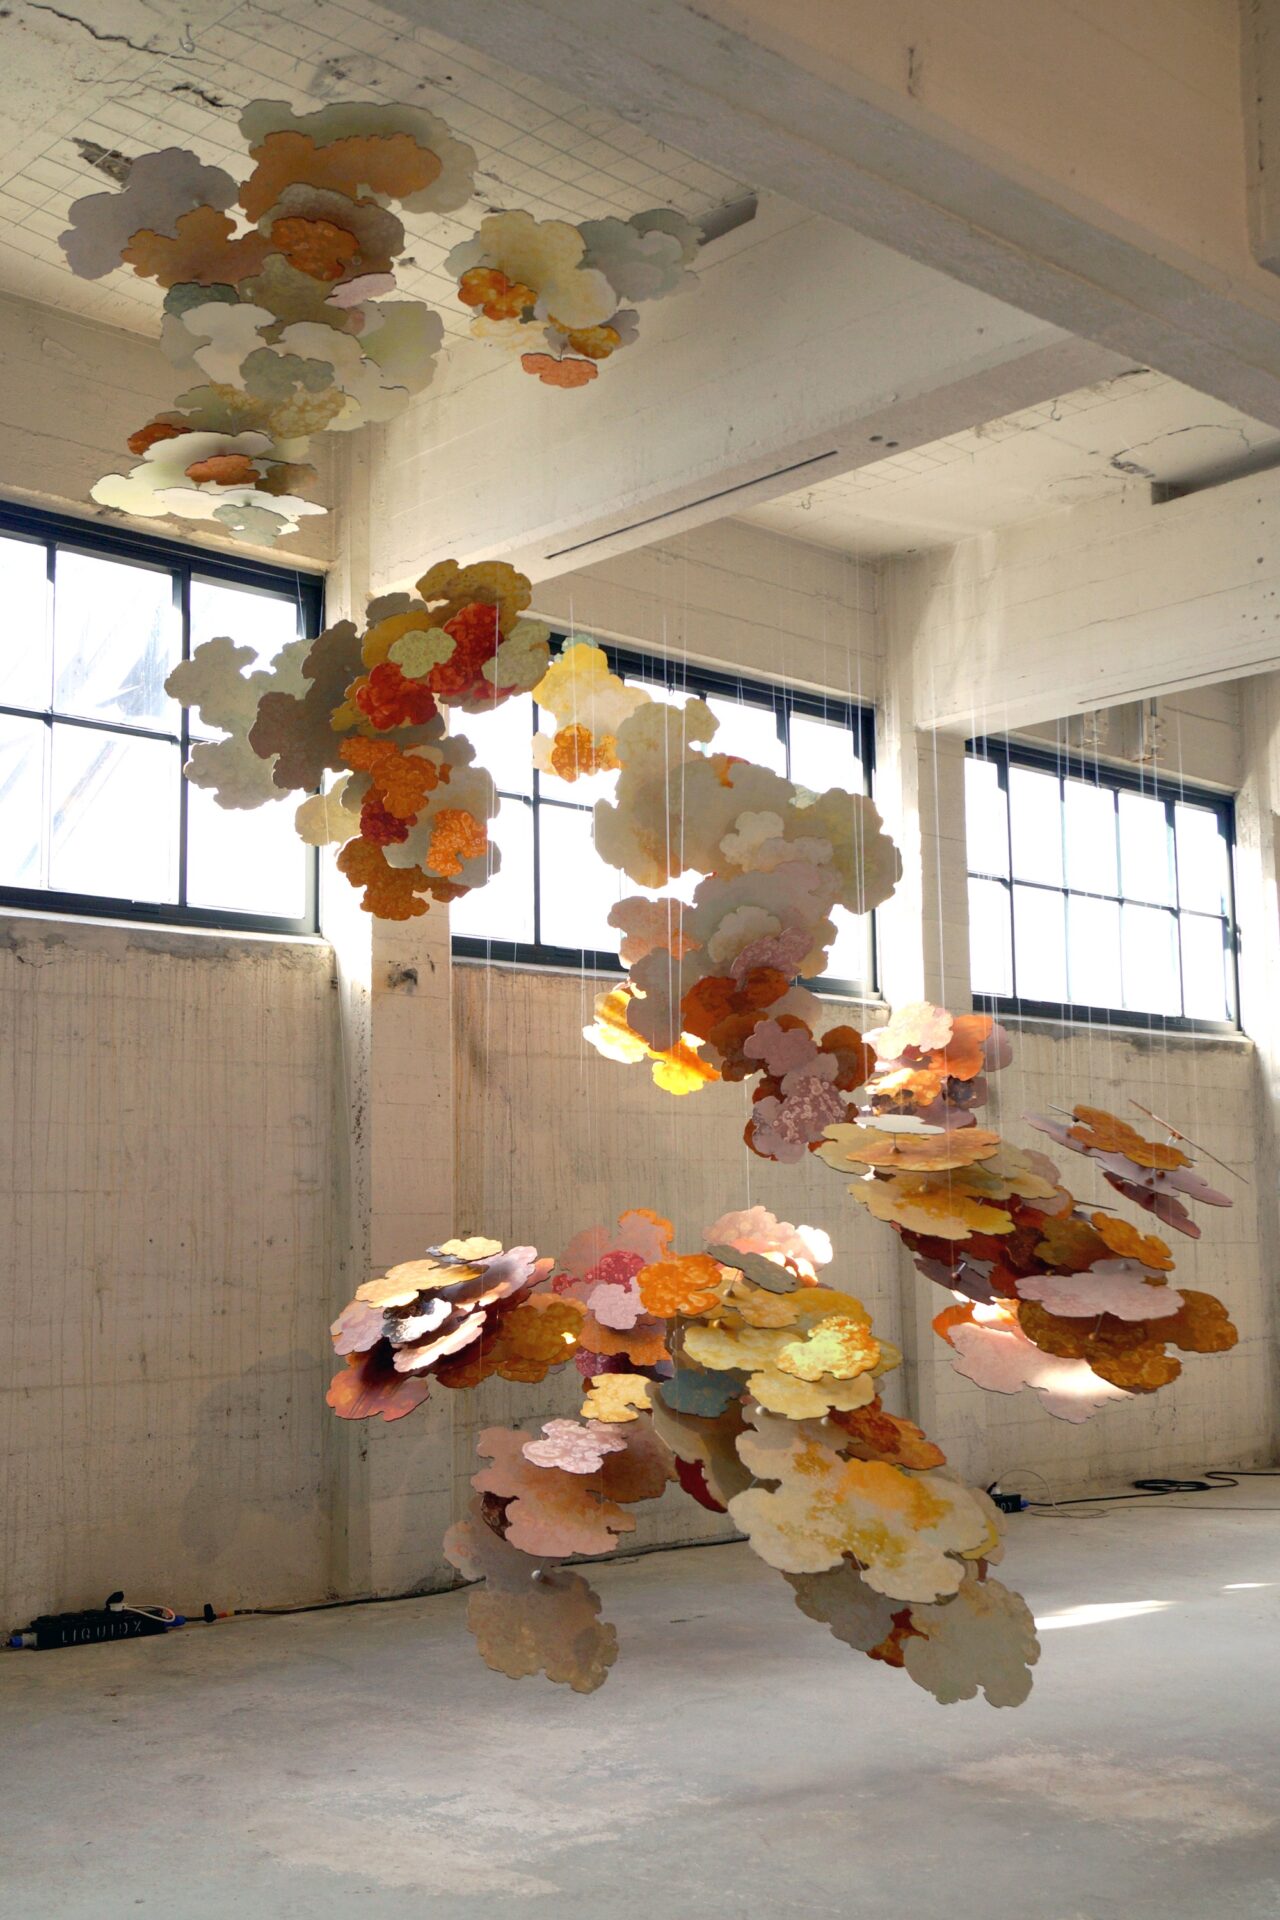 In Billowing Sculptures, Joris Kuipers Suspends Cloud-Like ‘Gardens’ from the Ceiling